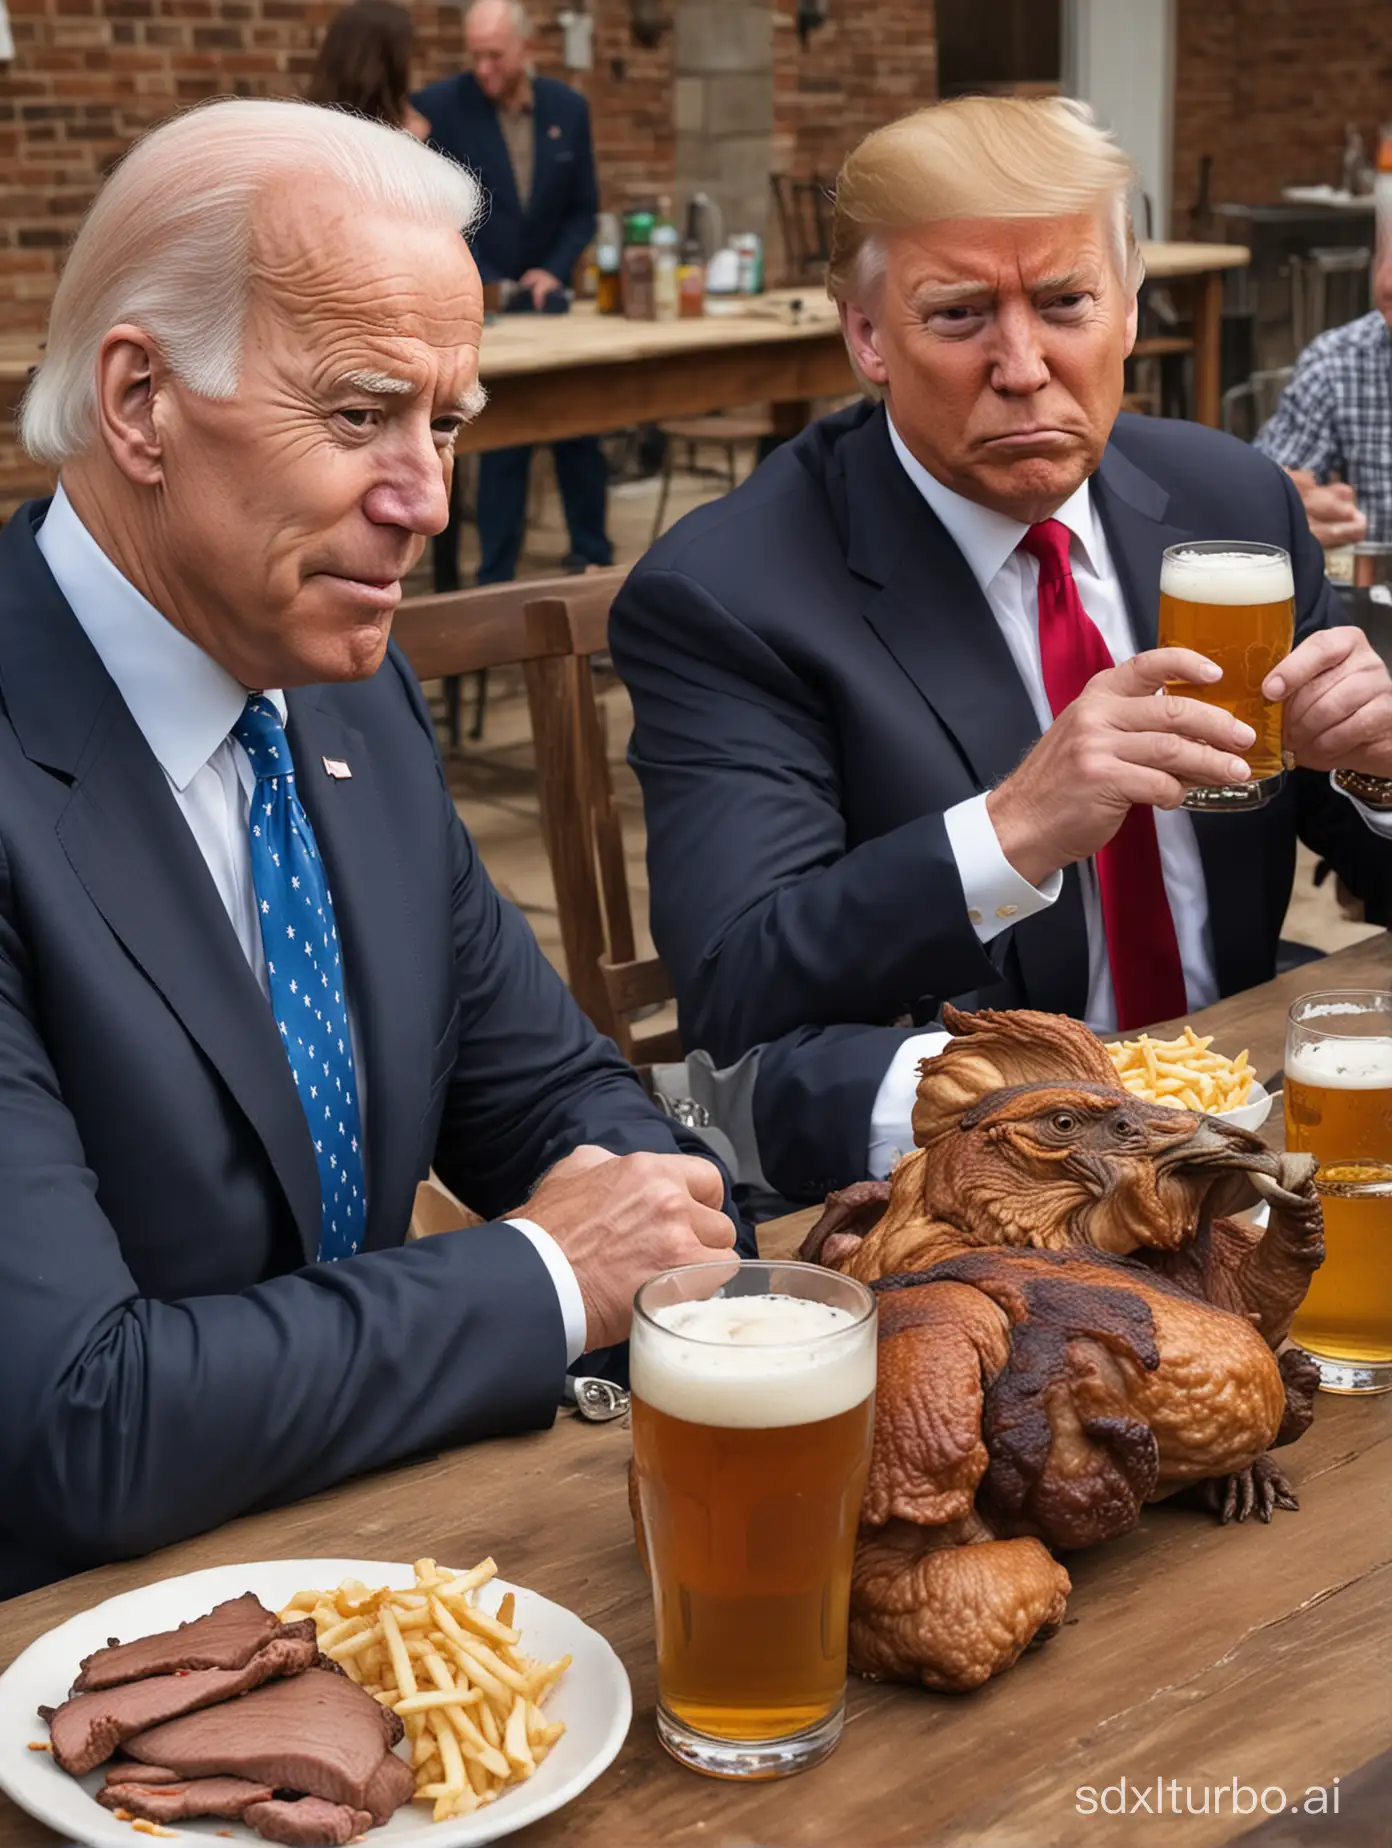 Presidential-Pair-Joe-Biden-and-Donald-Trump-Enjoying-Texas-Barbeque